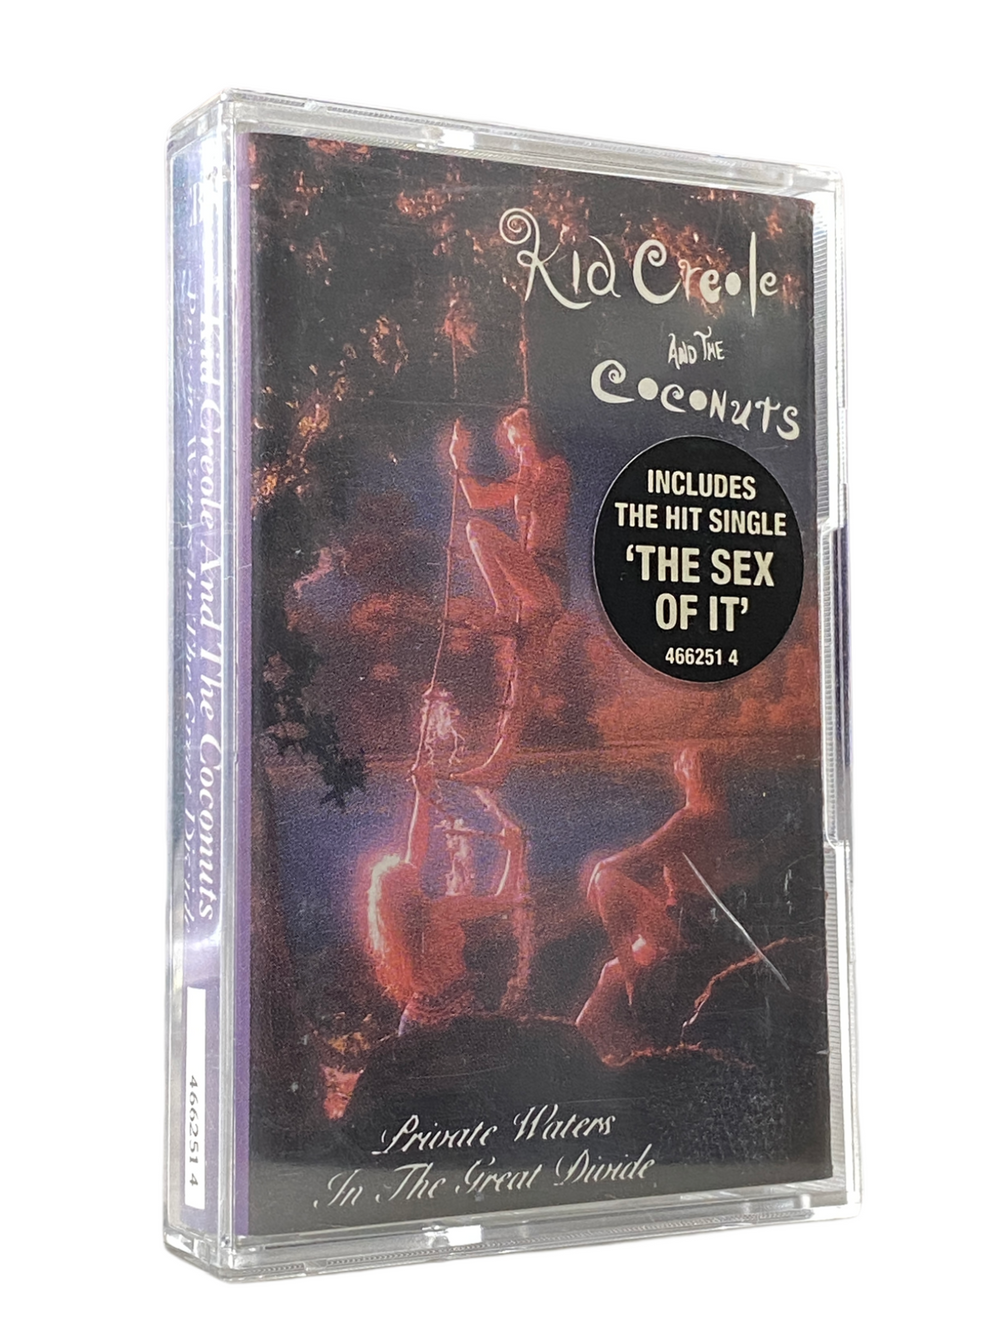 Prince – Kid Creole Private Waters Inc Sex Of It Original Cassette Tape UK 1990 Release PrincePrince –Prince –